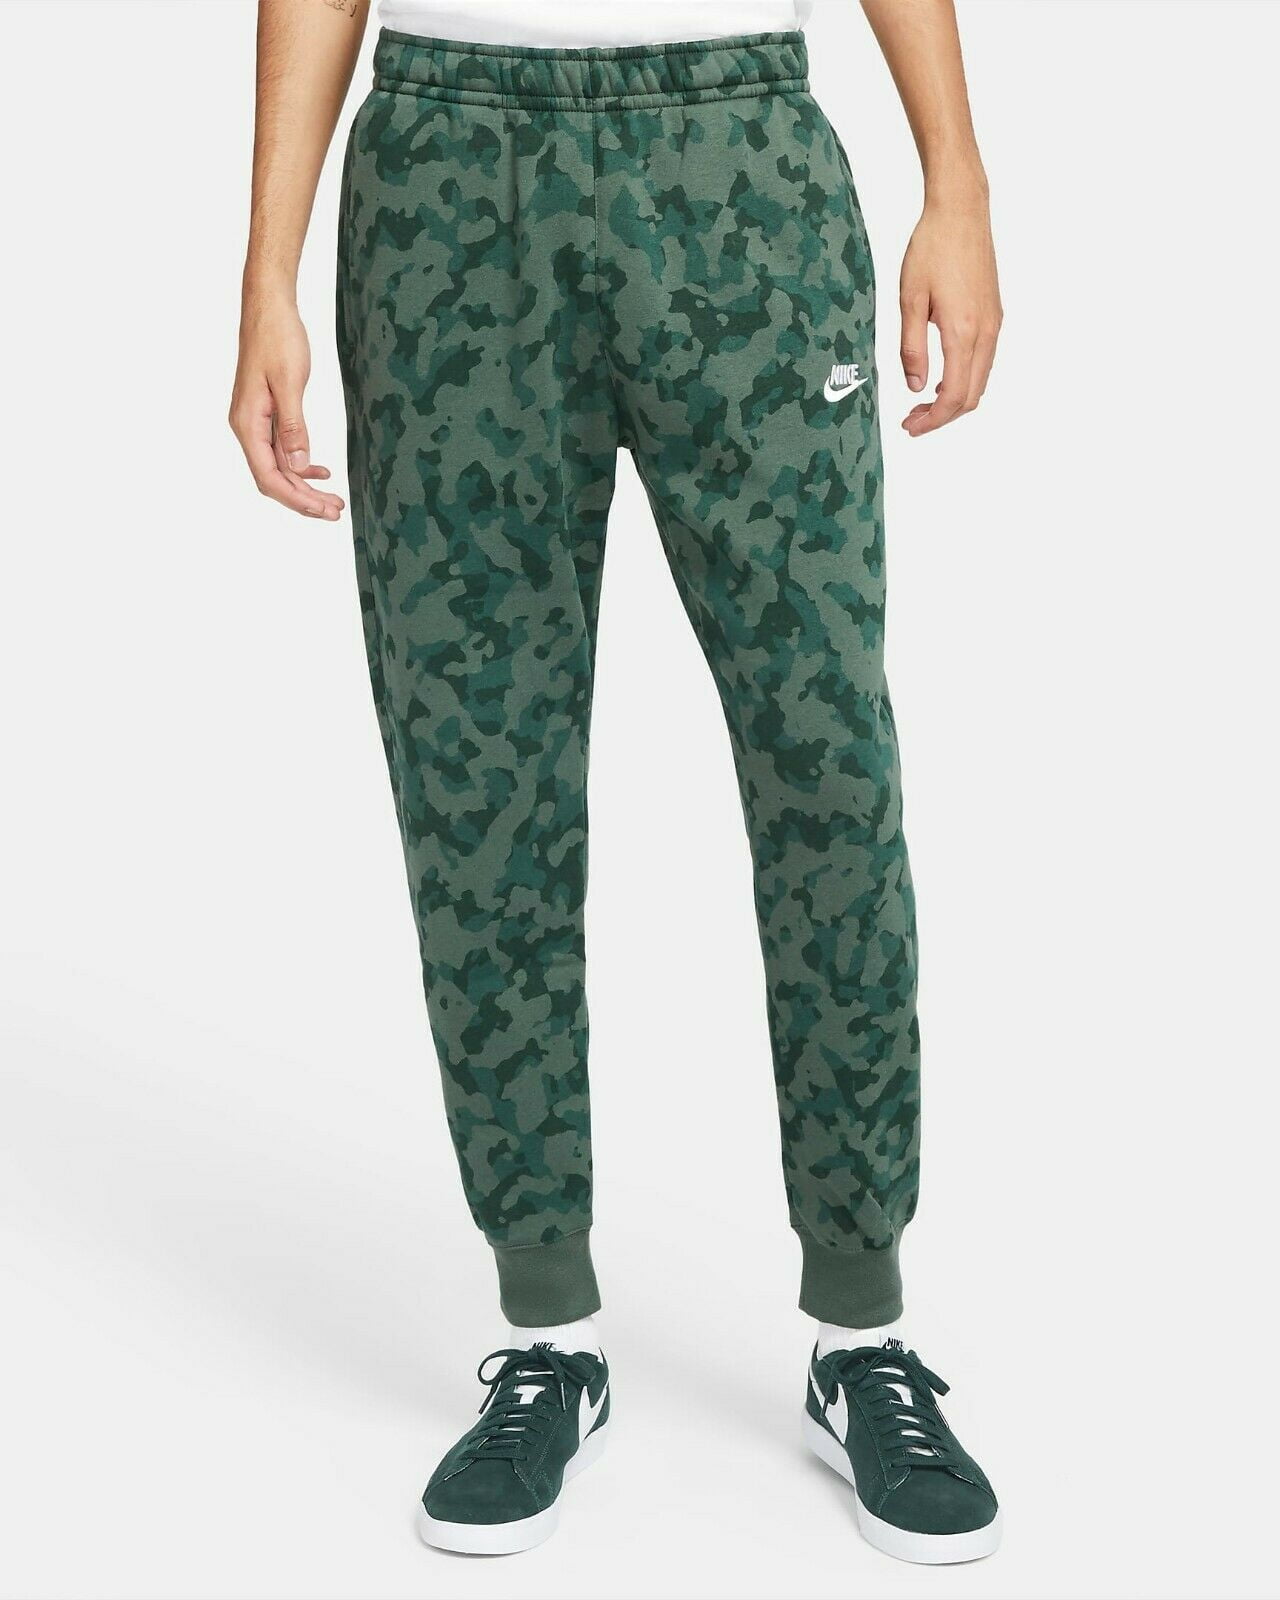 Mark Harde wind werkzaamheid Nike Men's Camo Fleece Galactic Jade Jogger Pants Size 2XL - Walmart.com